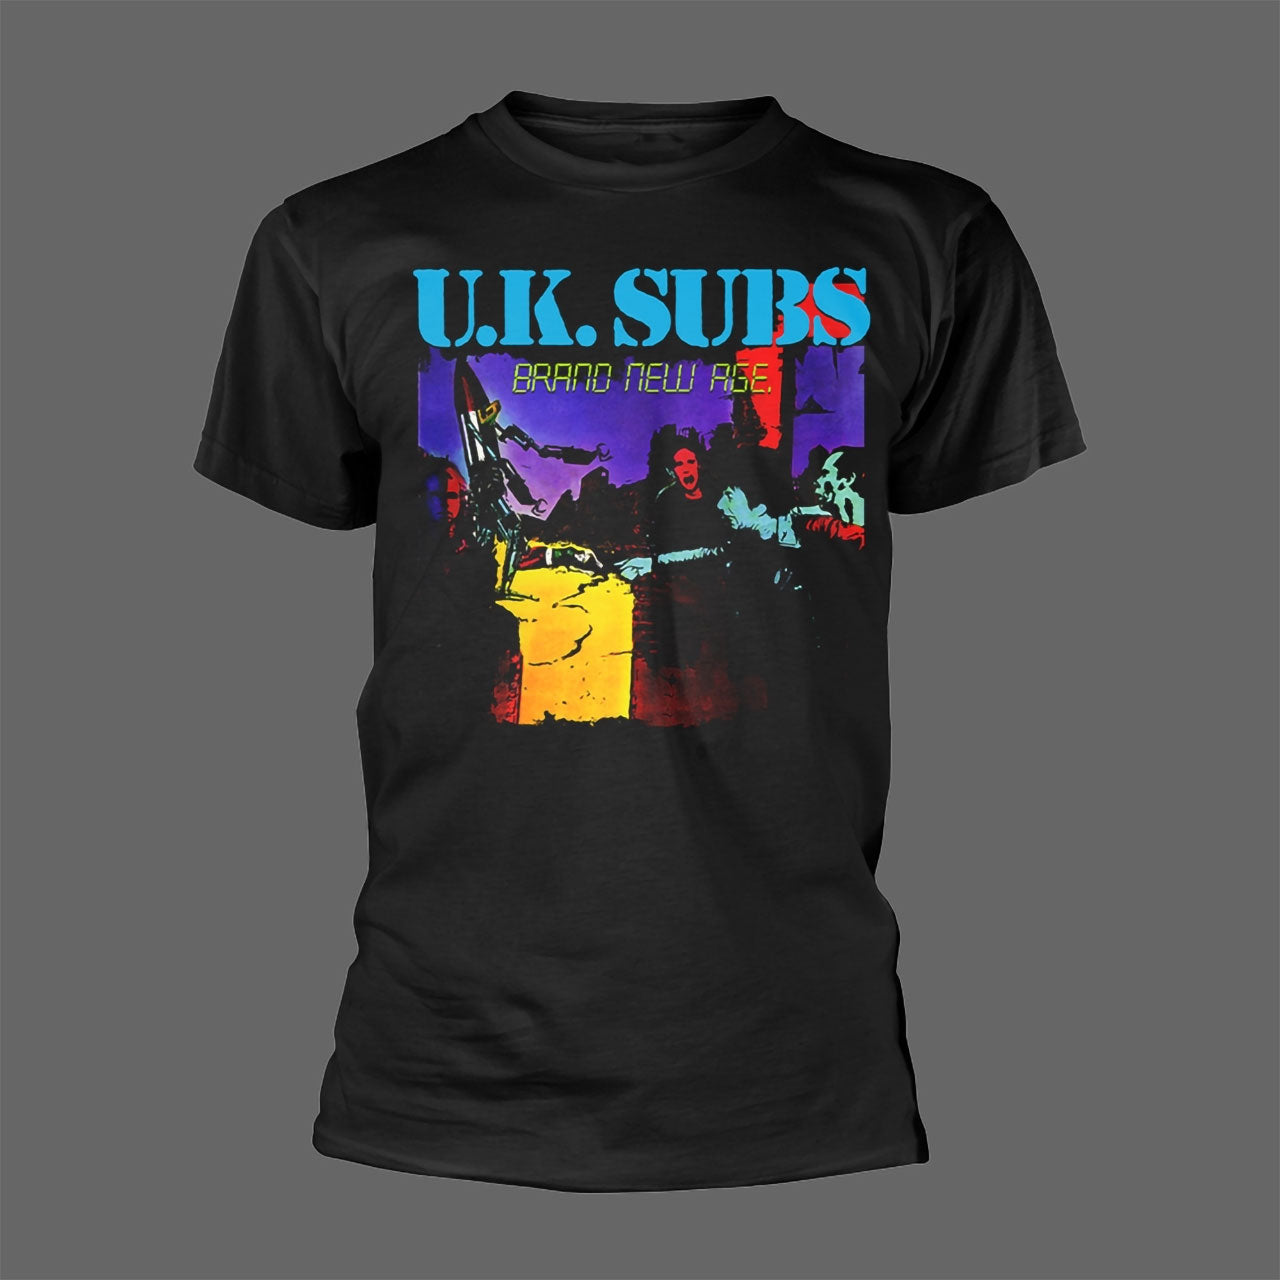 U.K. Subs - Brand New Age (T-Shirt)